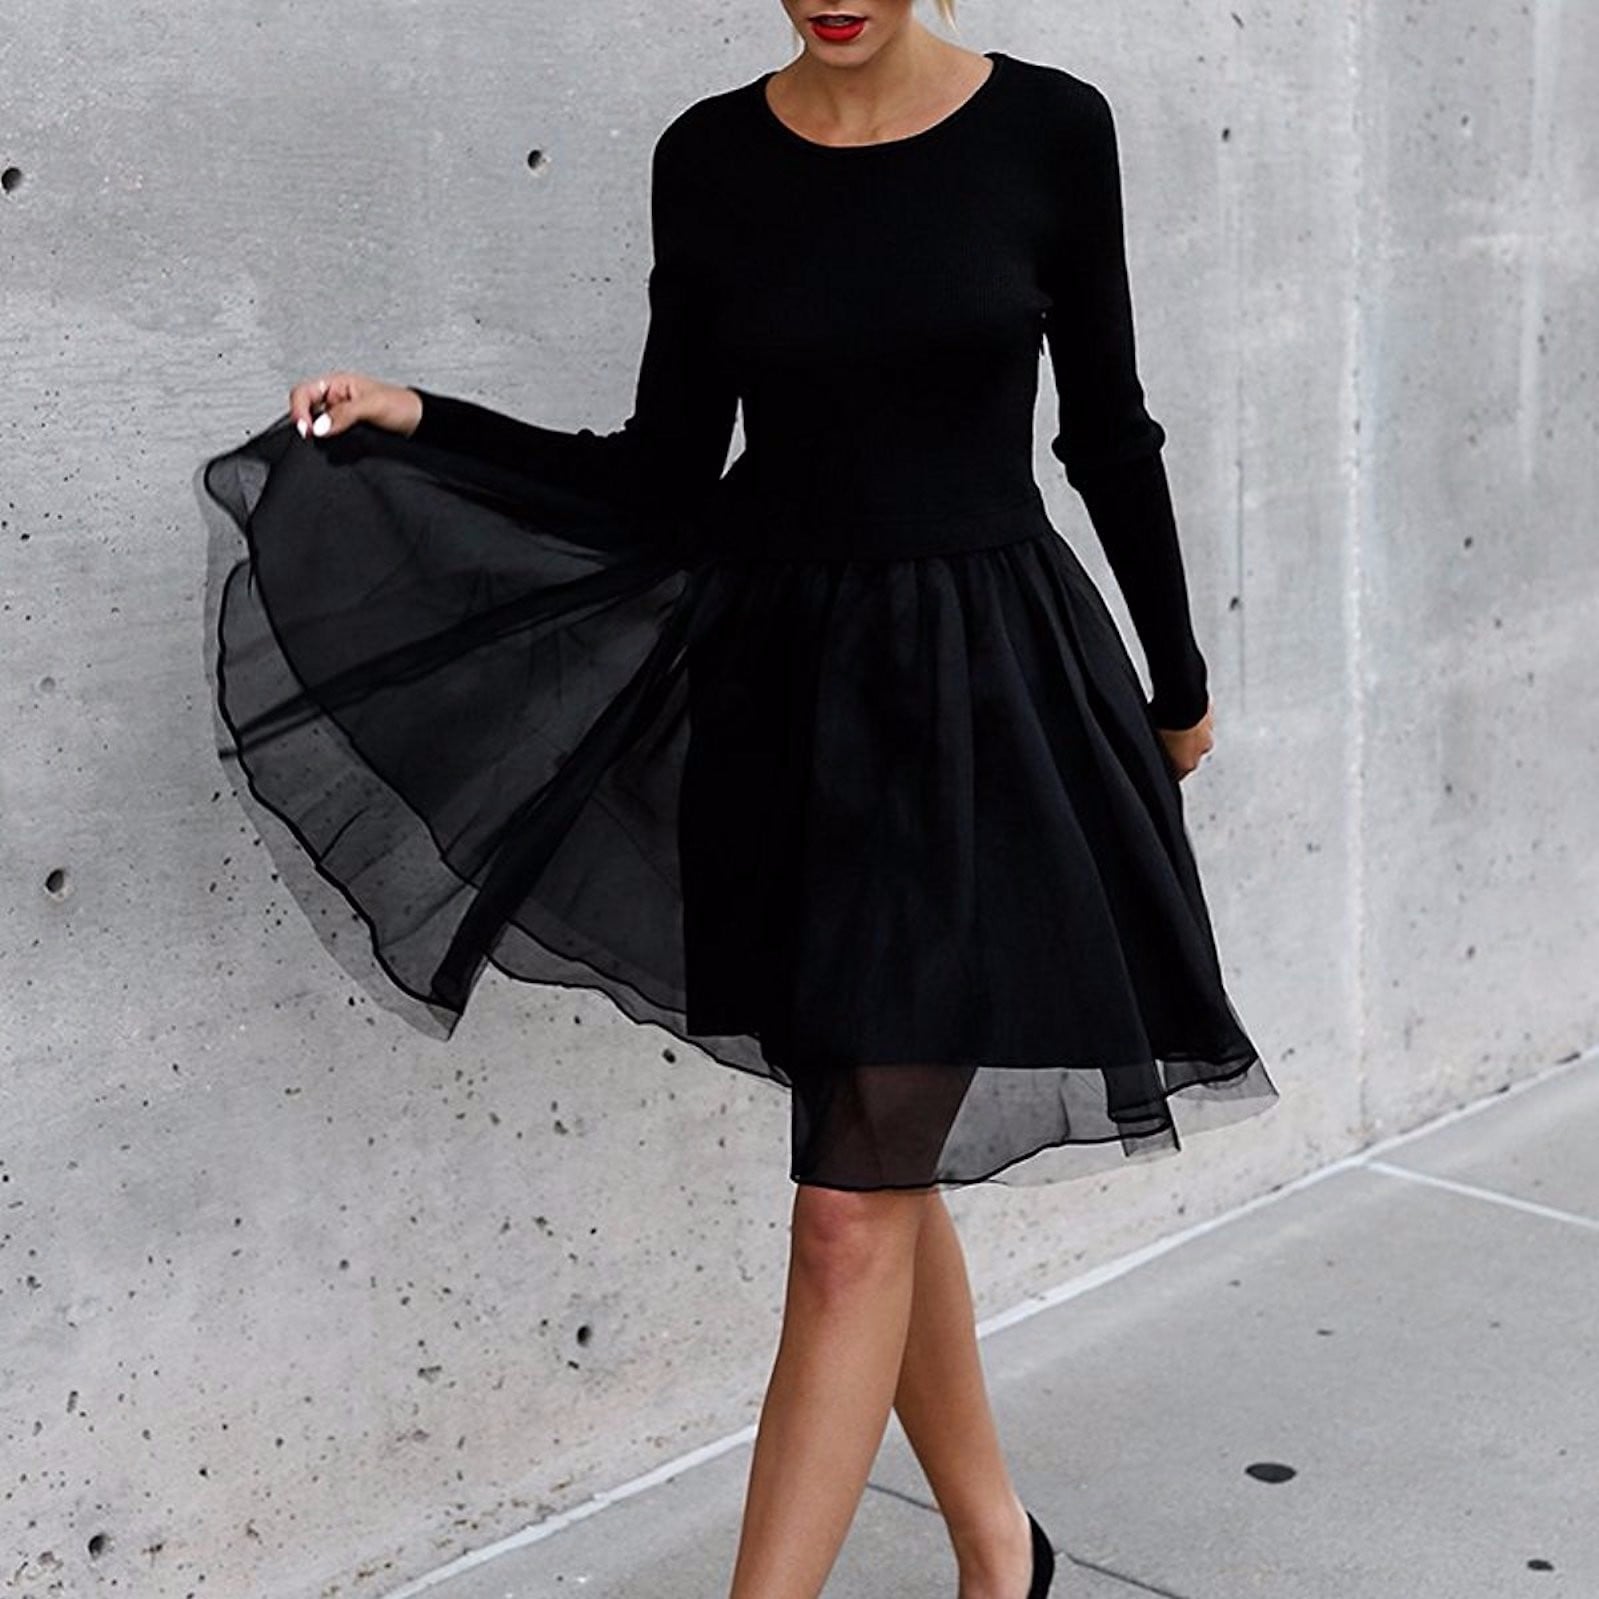 Black Dresses On Amazon Top Sellers, 54 ...